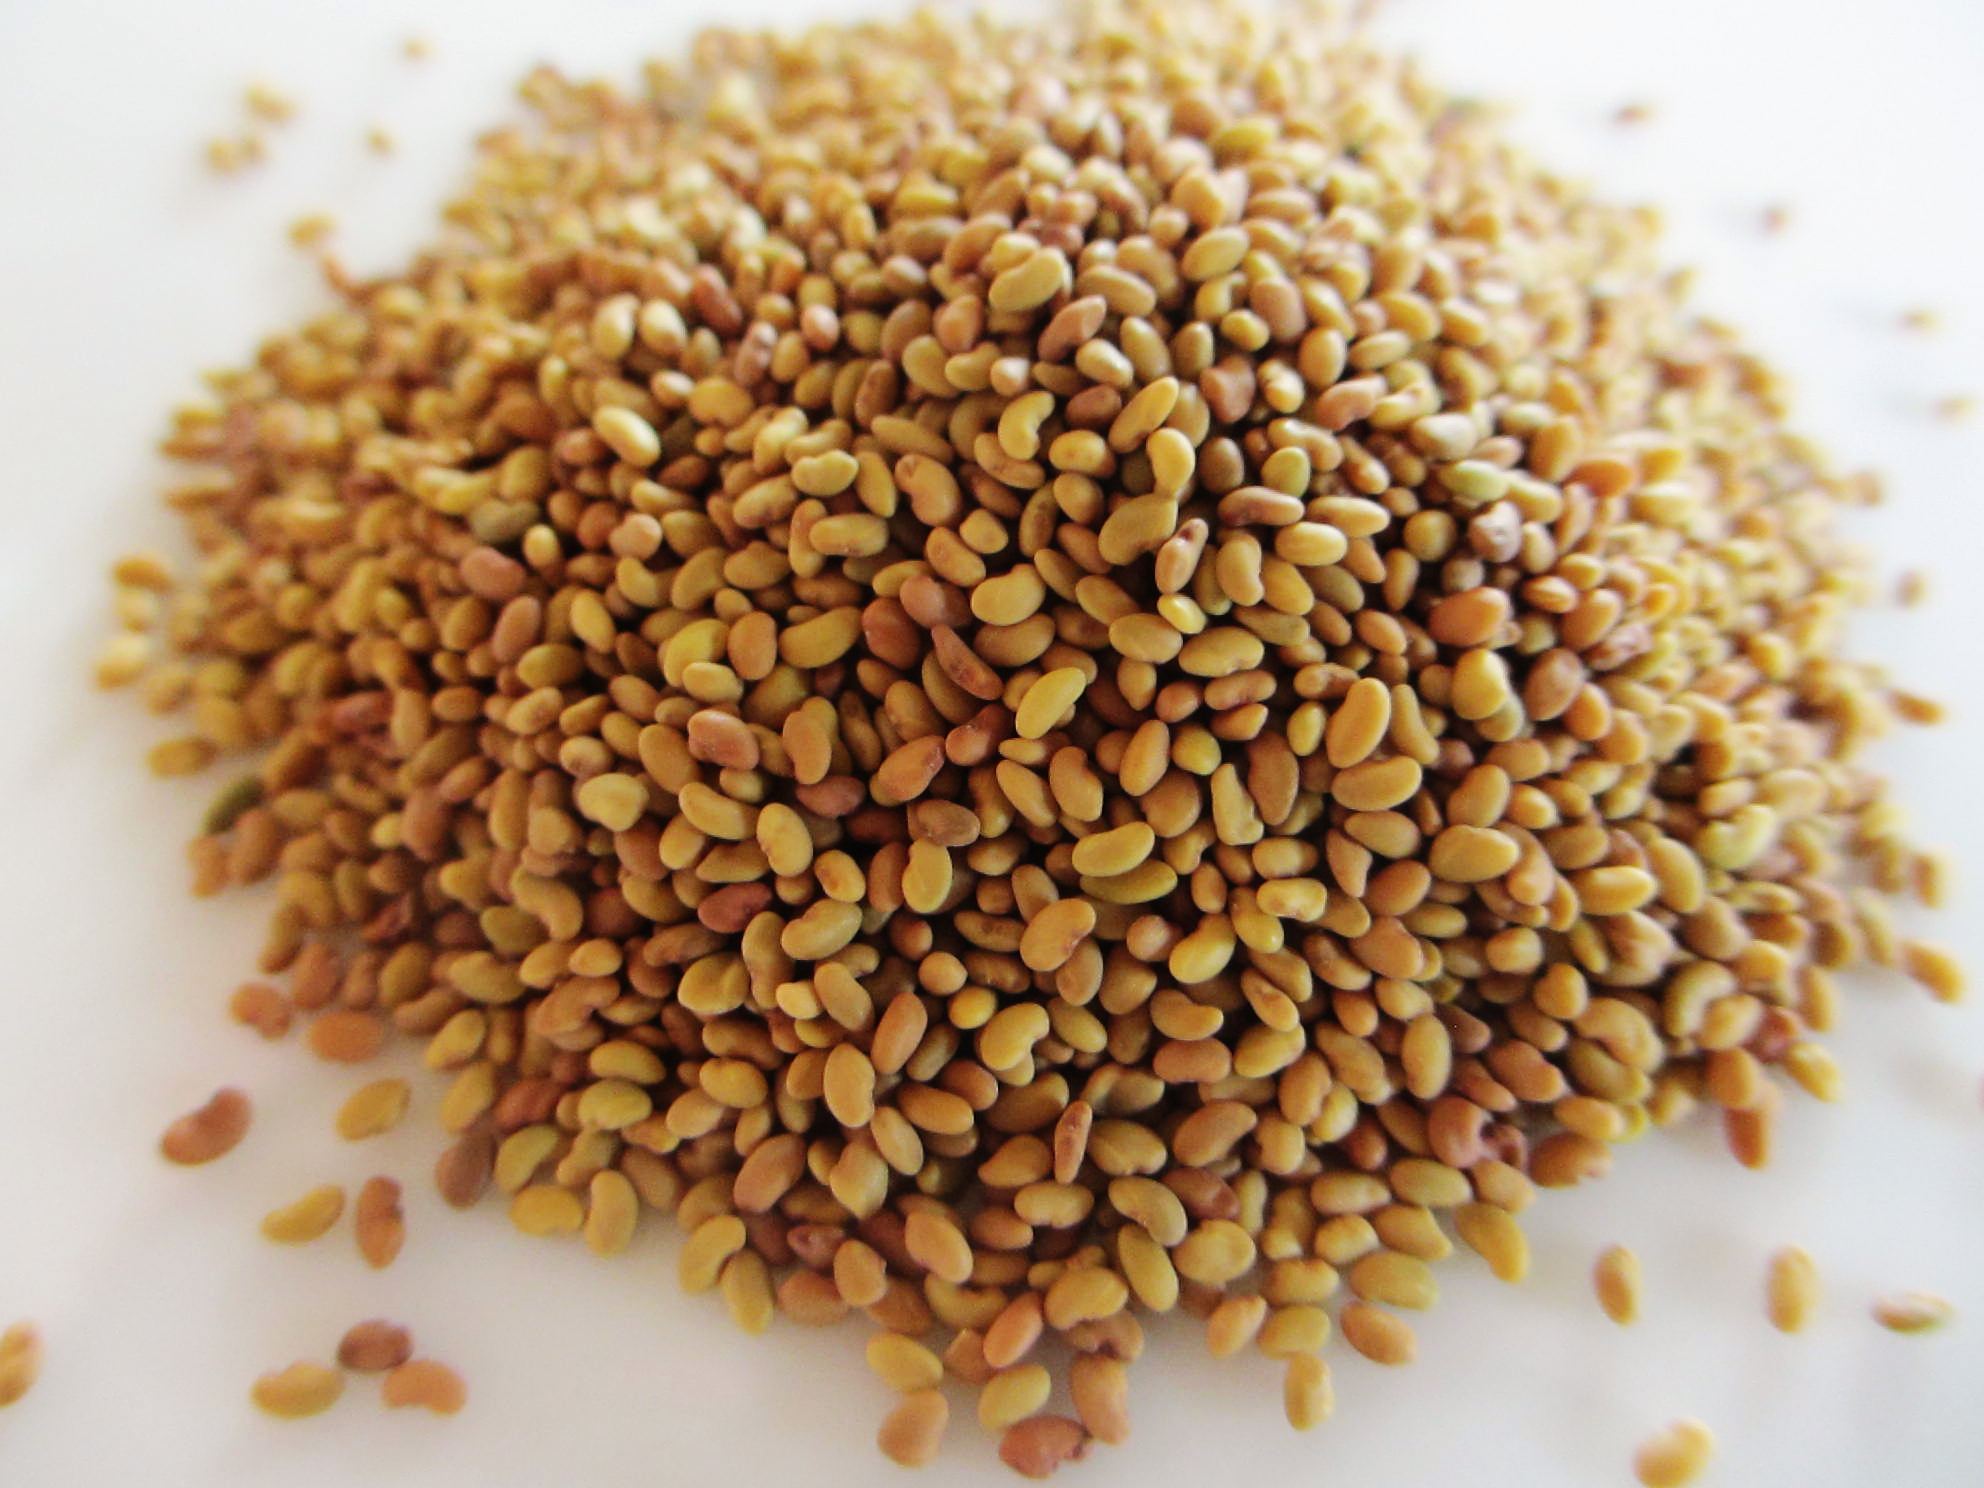 Alfalfa-seeds